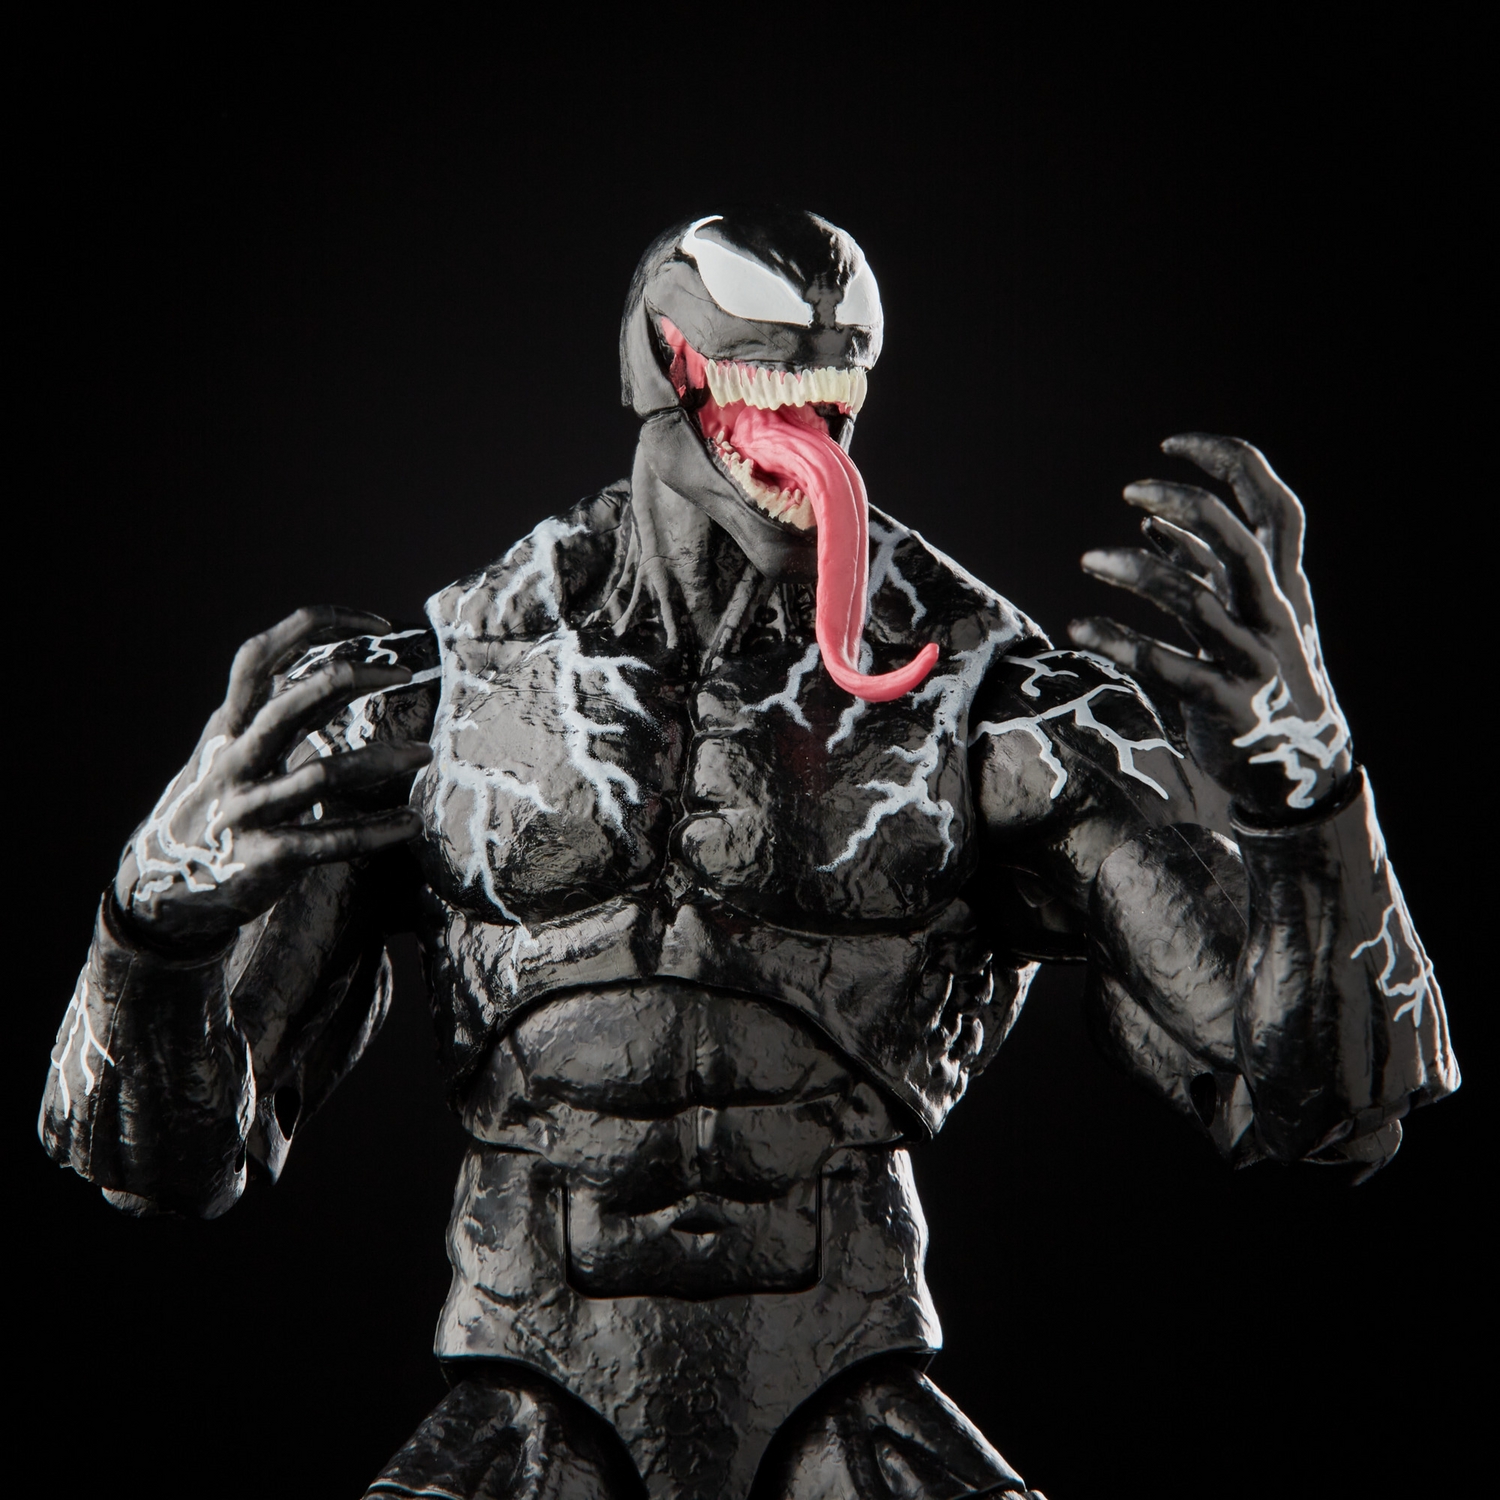 MARVEL LEGENDS SERIES 6-INCH VENOM Figure Assortment - Venom (4).jpg